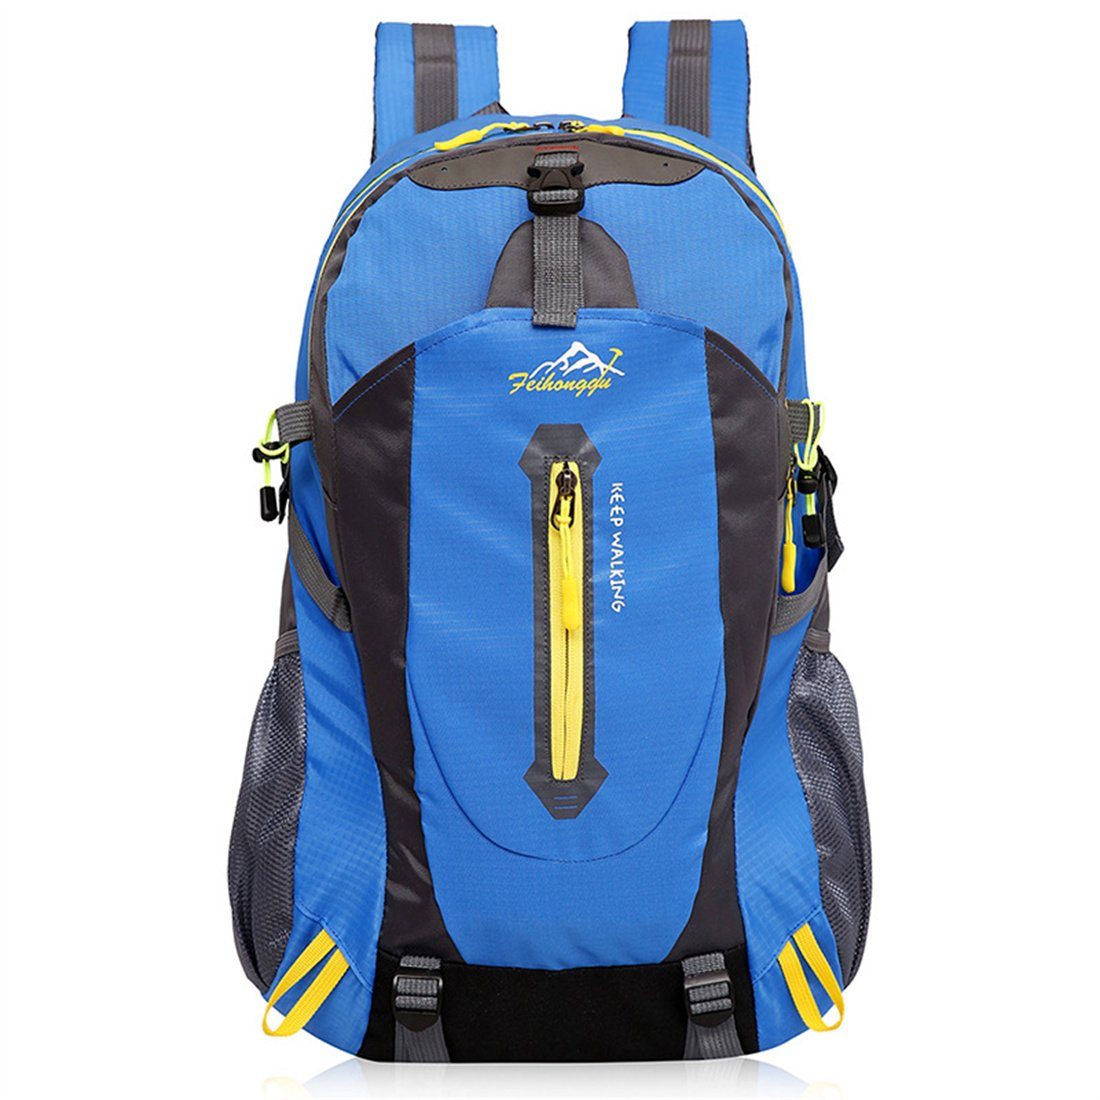 DÖRÖY Wanderrucksack 40L wasserfester Seesack, Outdoor-Wanderrucksack,Studenten-Schultasche blau